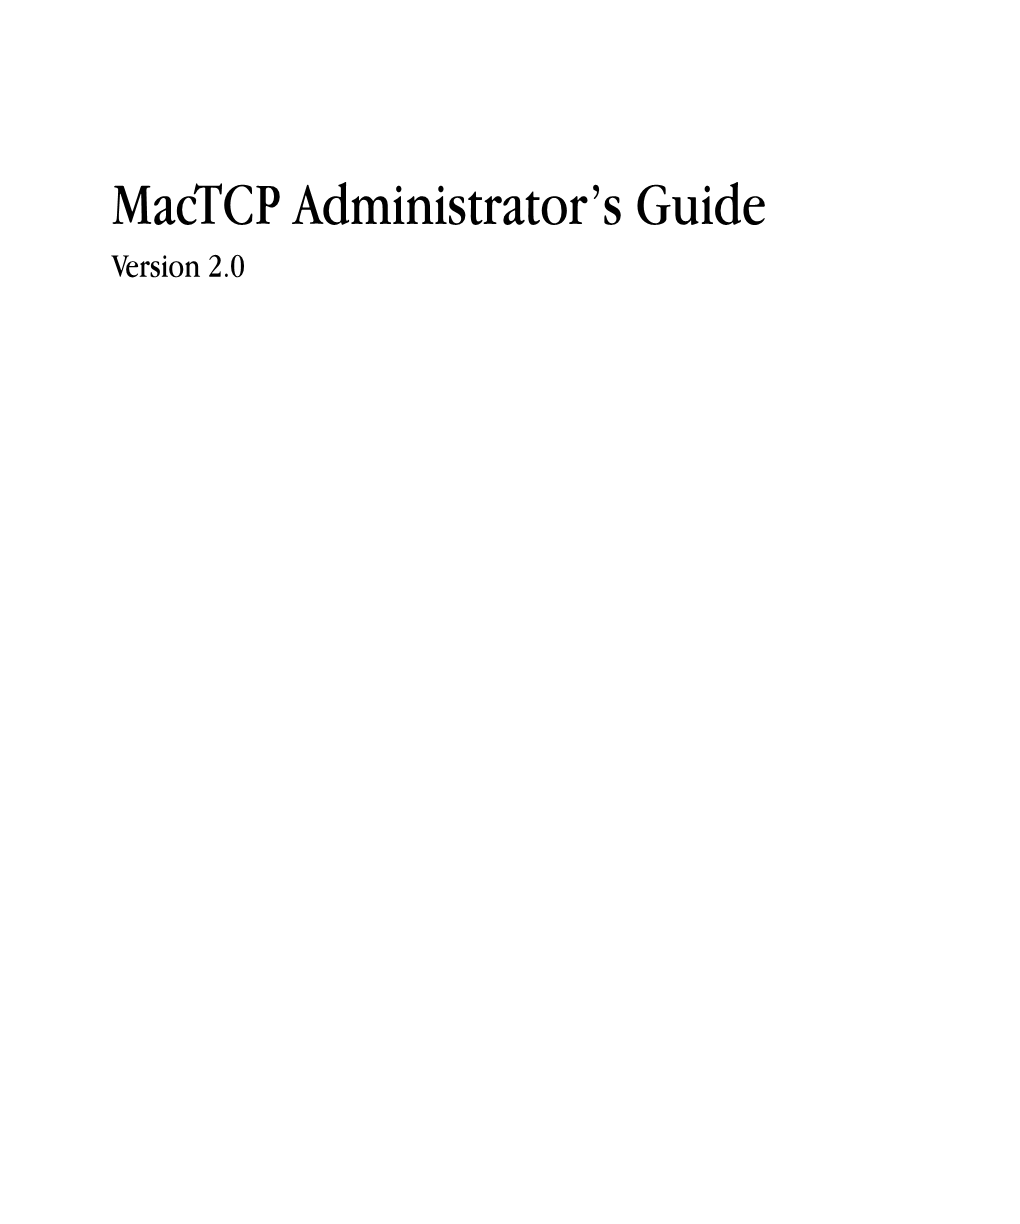 Mactcp Administrator's Guide